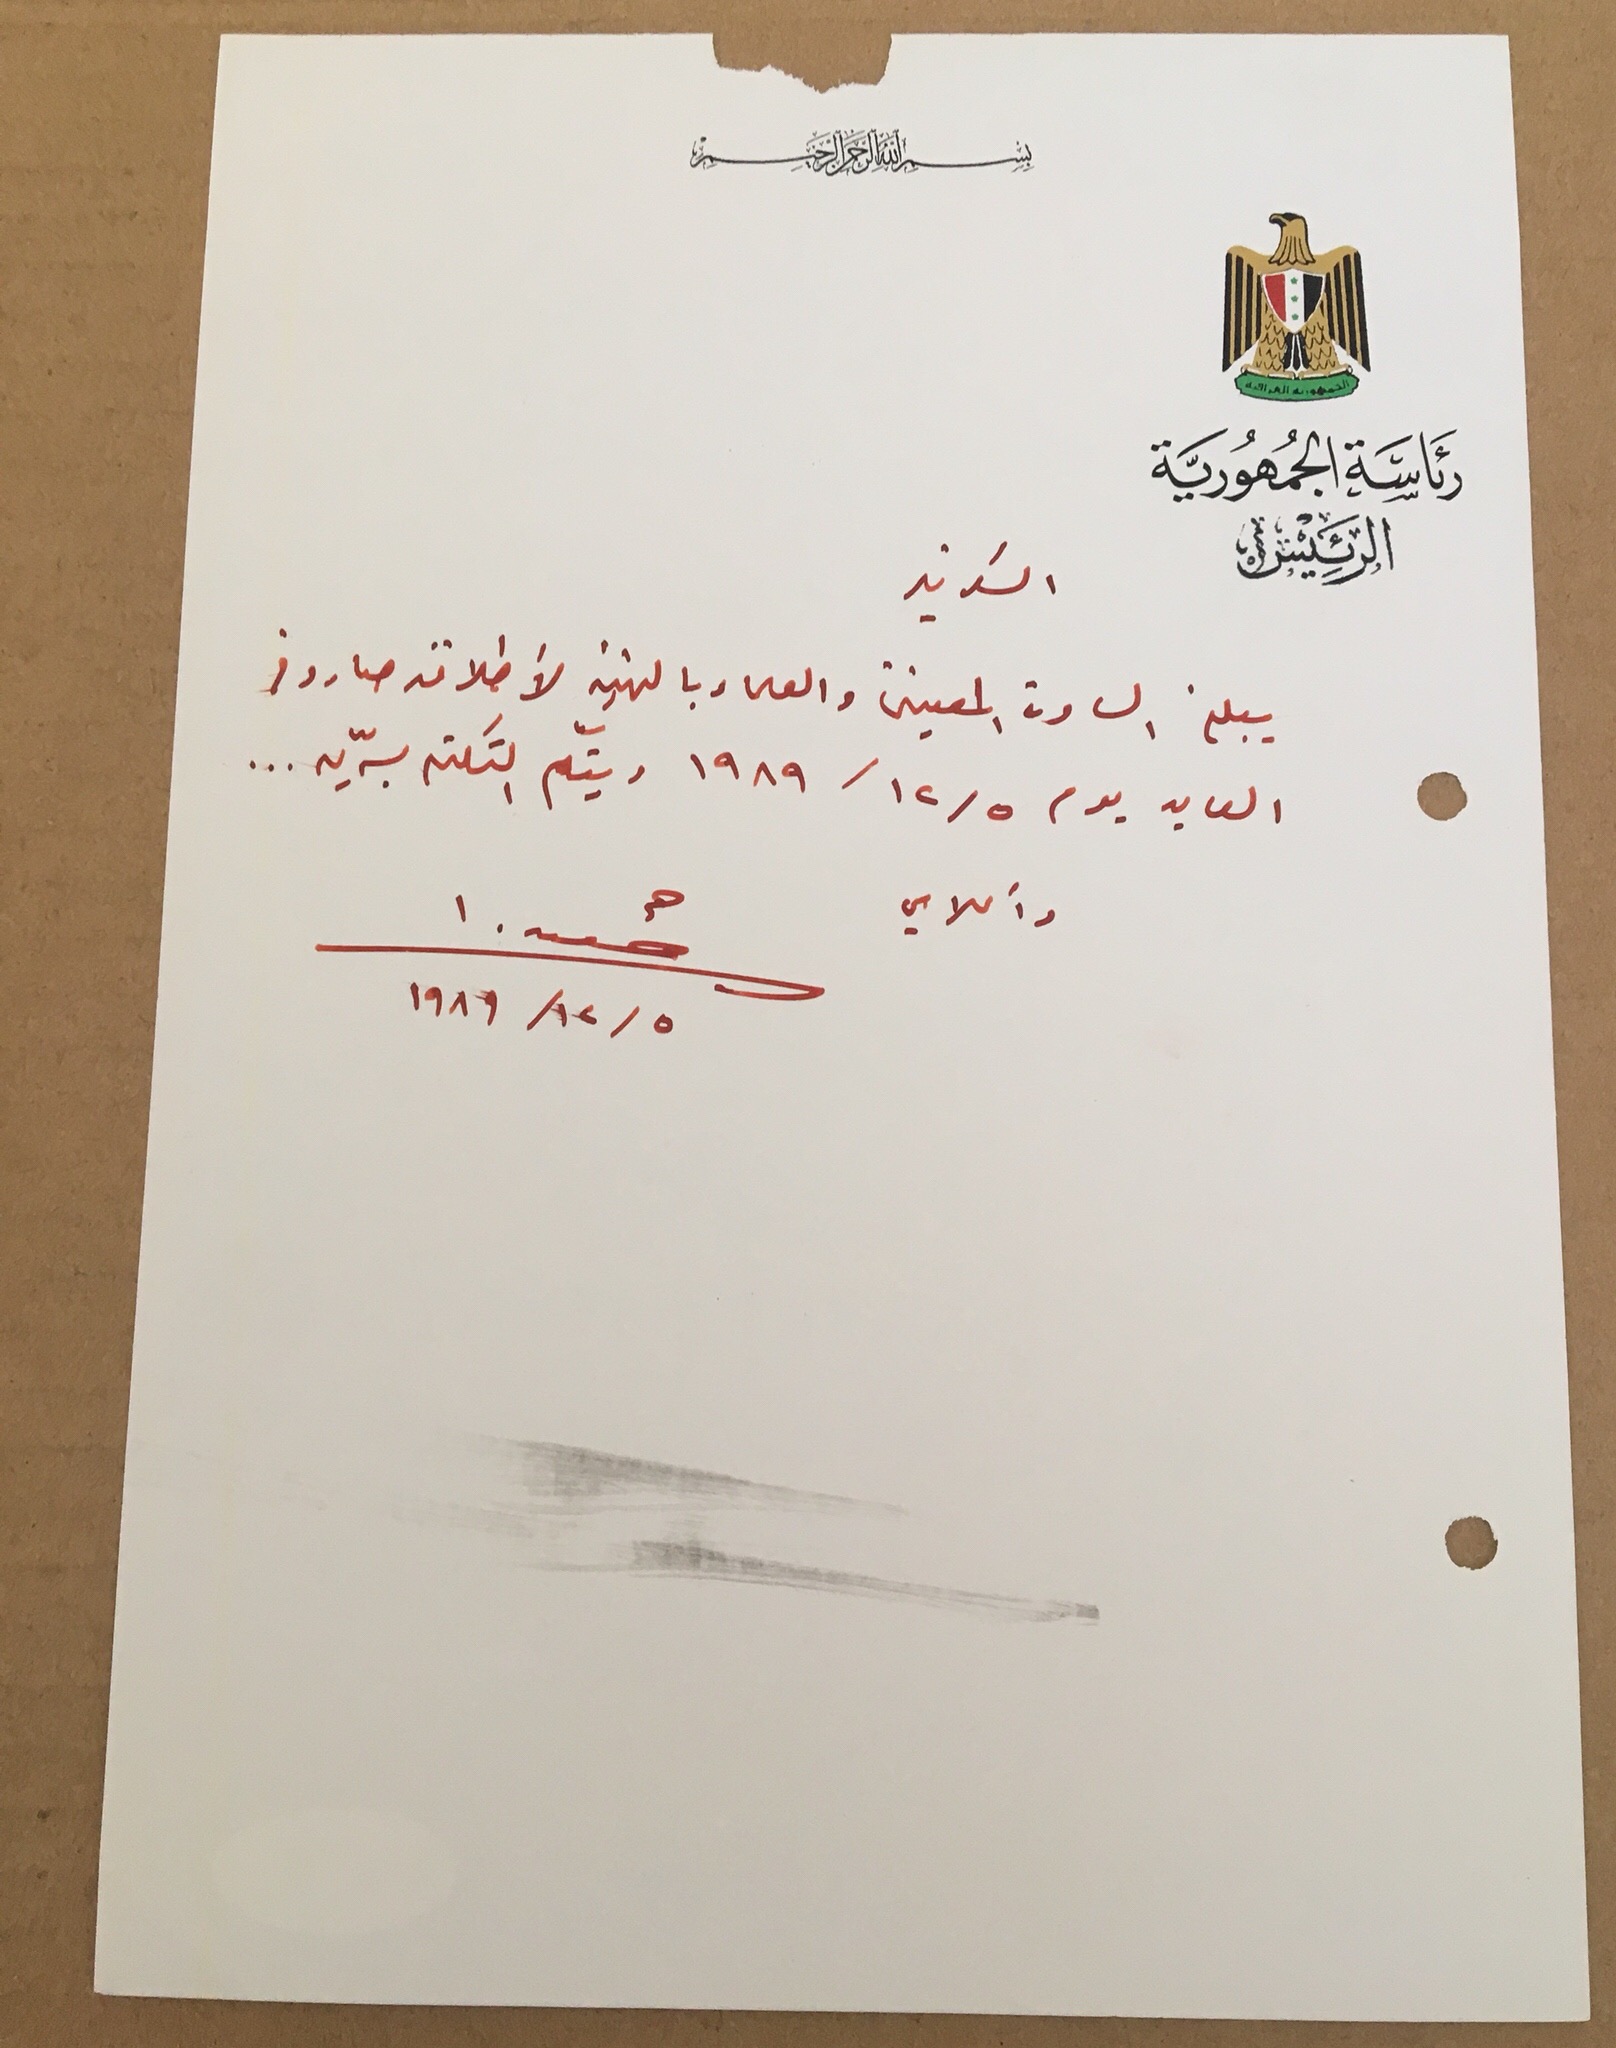 Autograph Handwritten Document Saddam Hussein Ordered to Launch Al-Abid Rocket صدام يامر باطلاق صاروخ العابد